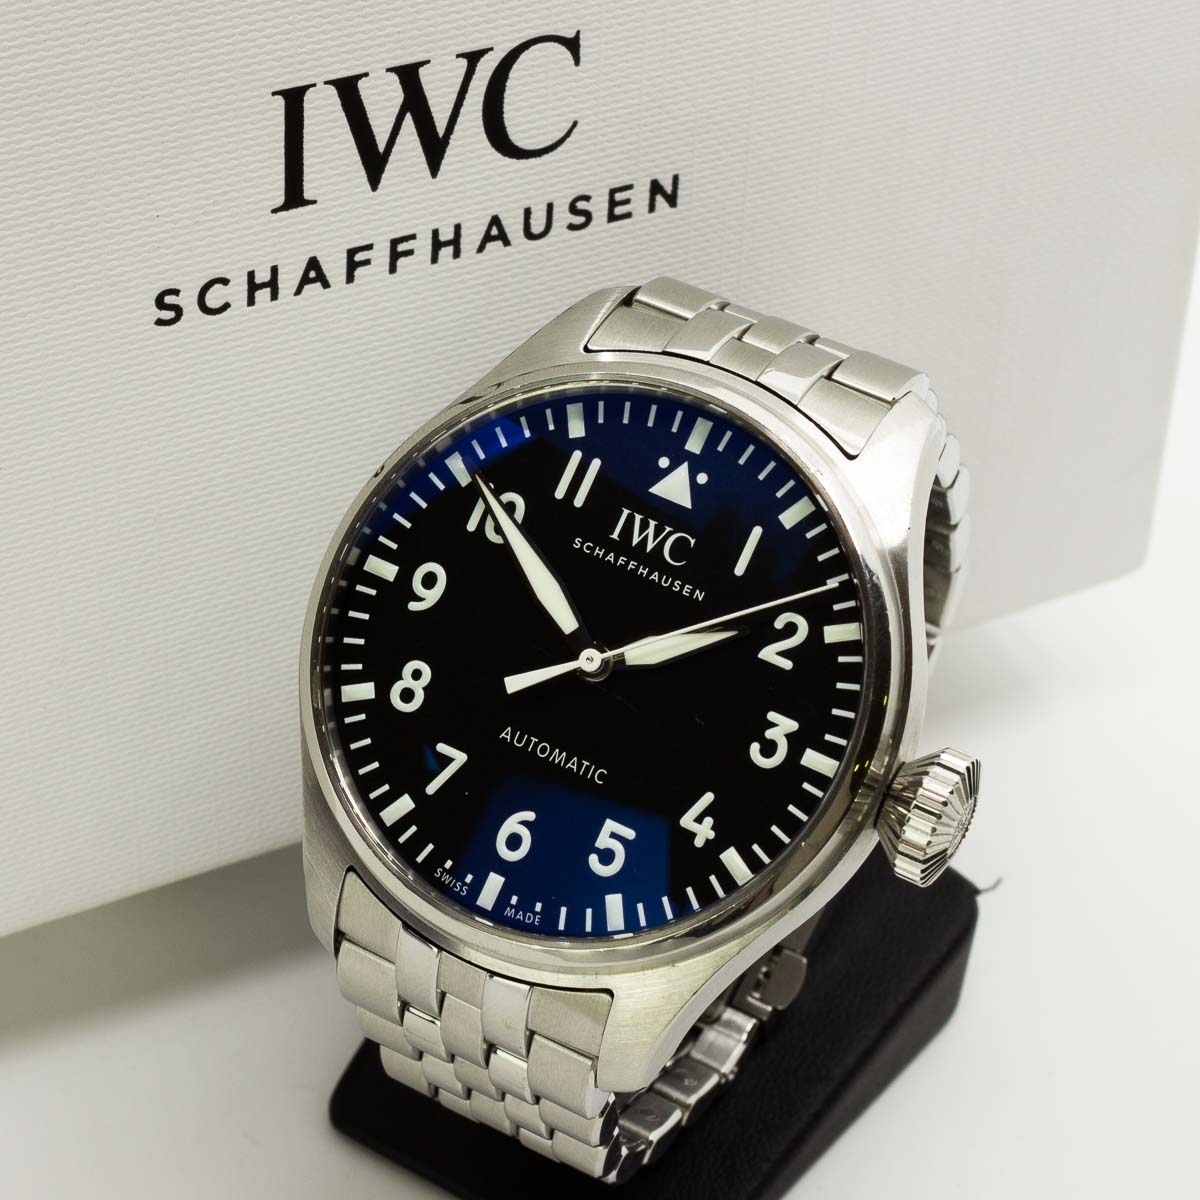 1 Armbanduhr IWC Big Pilot IW329301 mit Stahlband + Original-Lederband, Originalpapiere (Mai 2022) und -box,